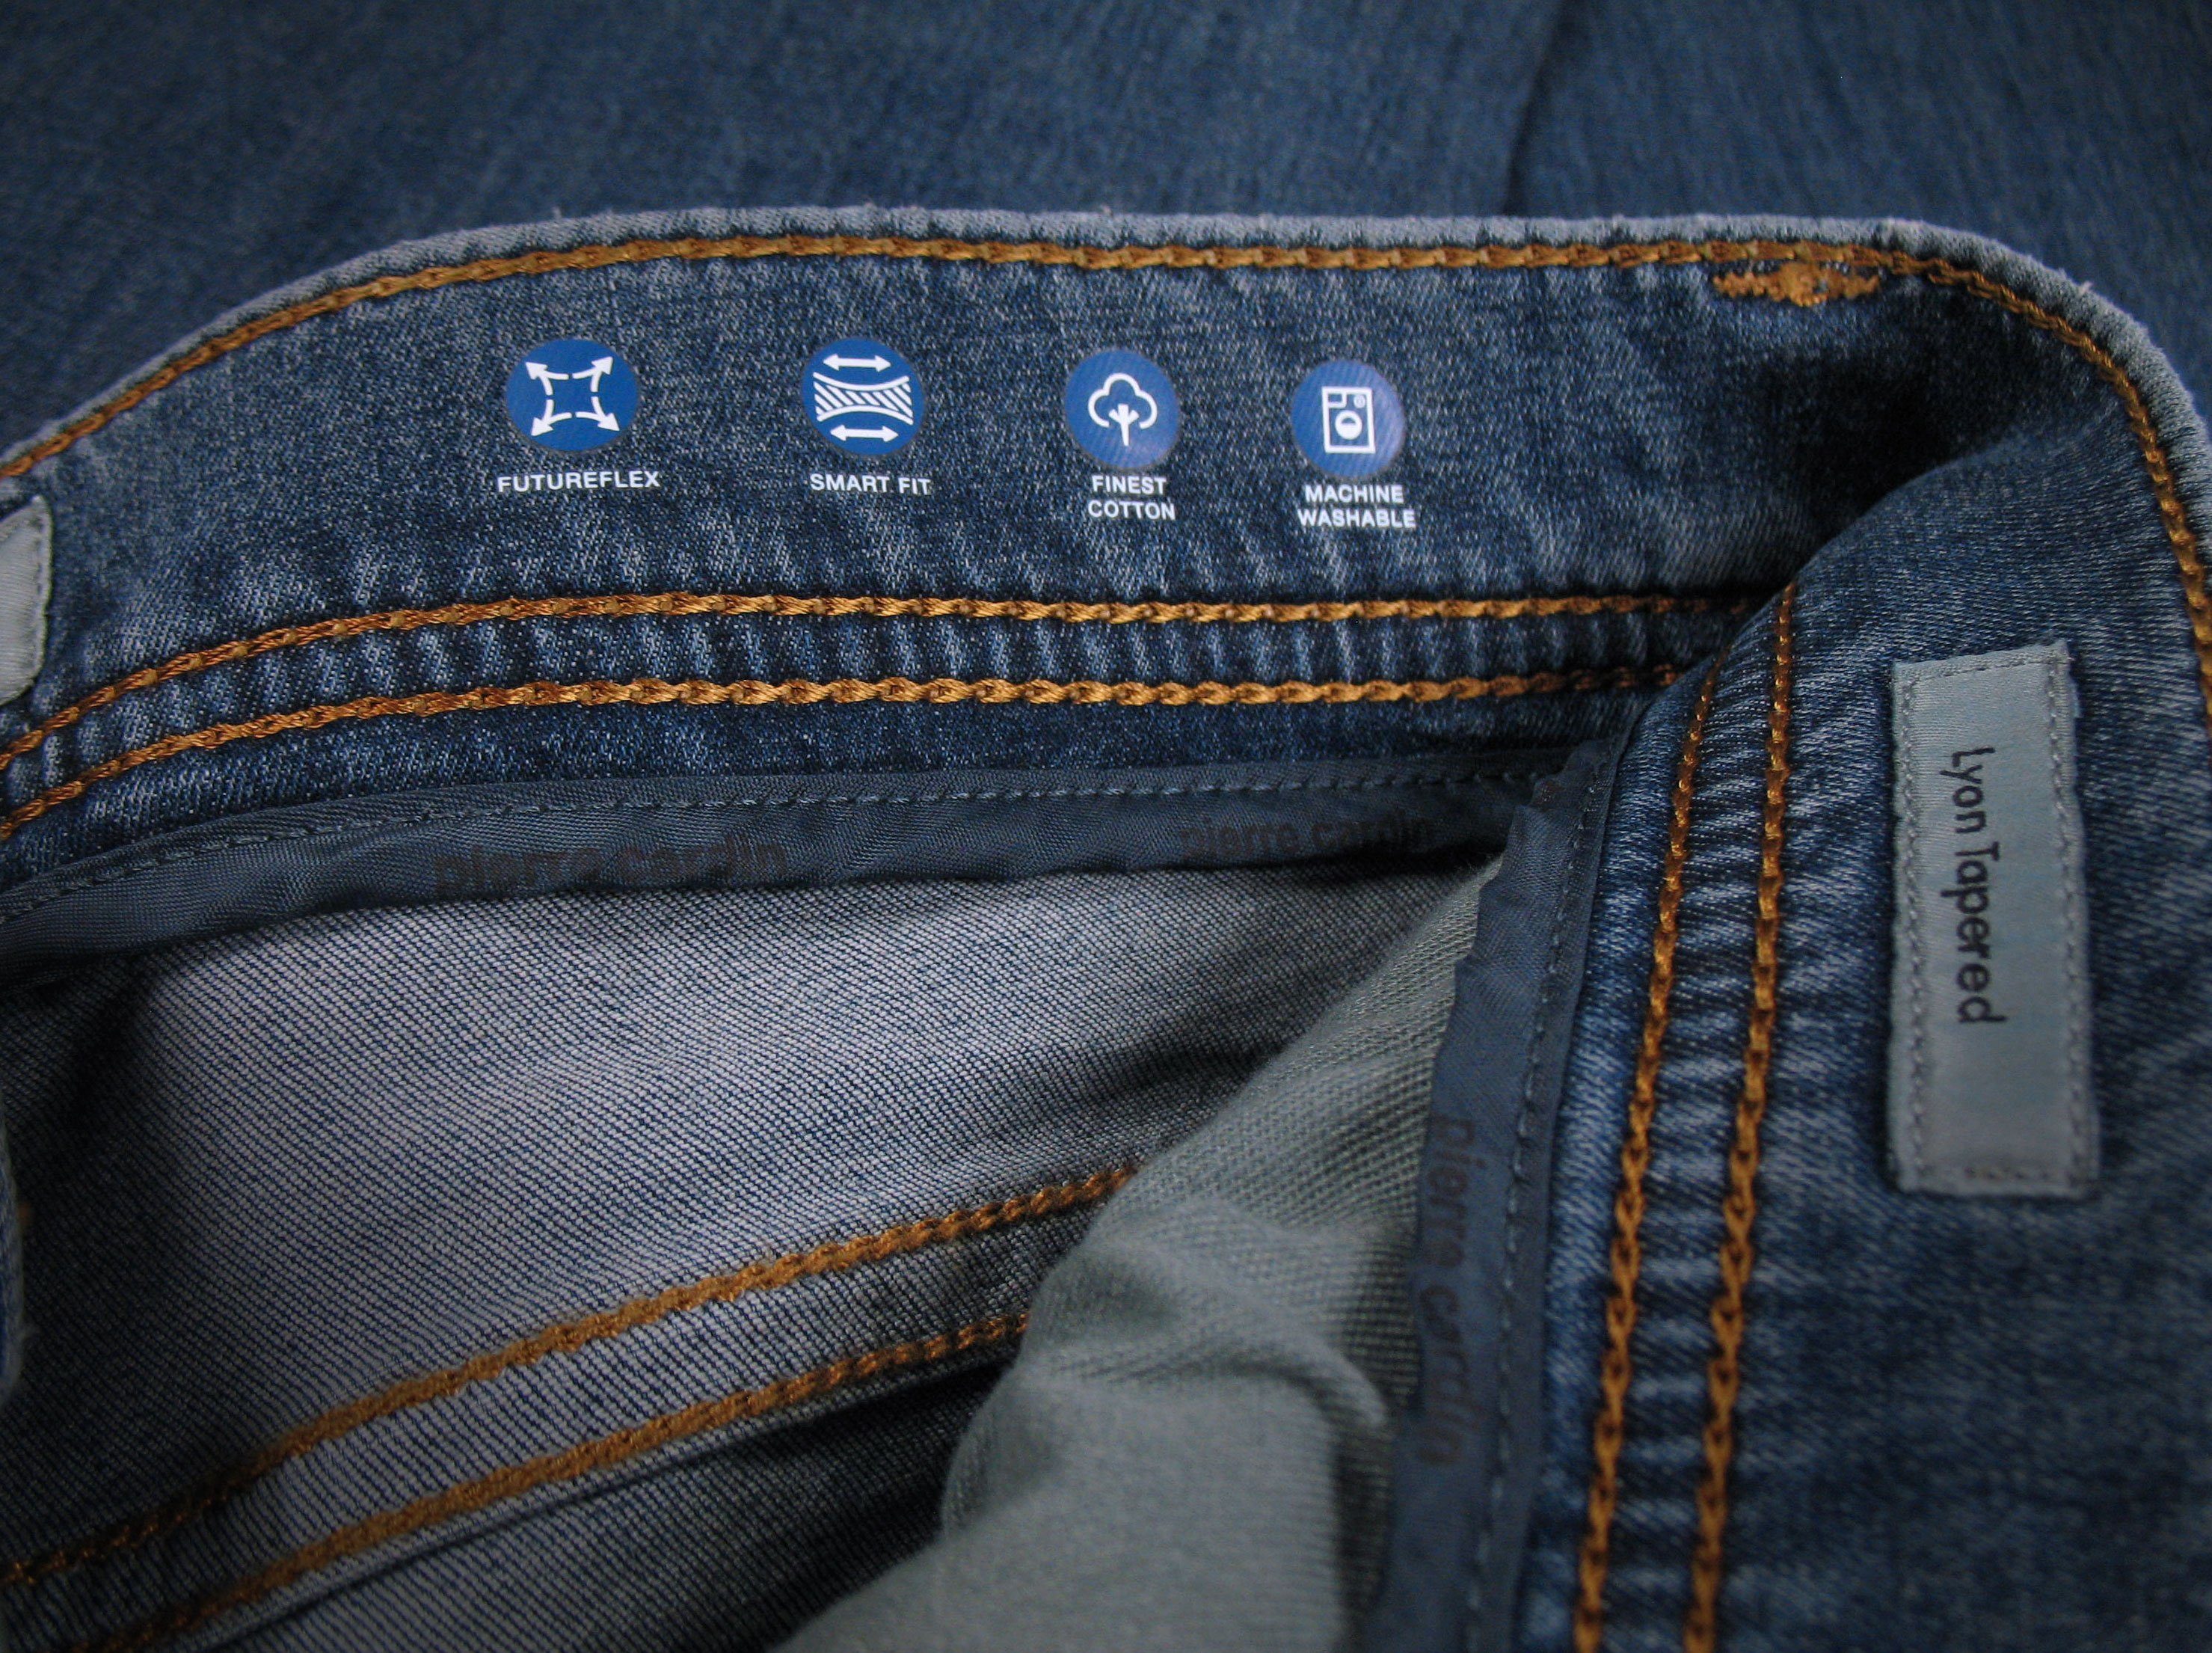 Dark Blue 5-Pocket-Jeans Vintage Futureflex Denim Stretch Lyon Cardin Pierre Used Tapered